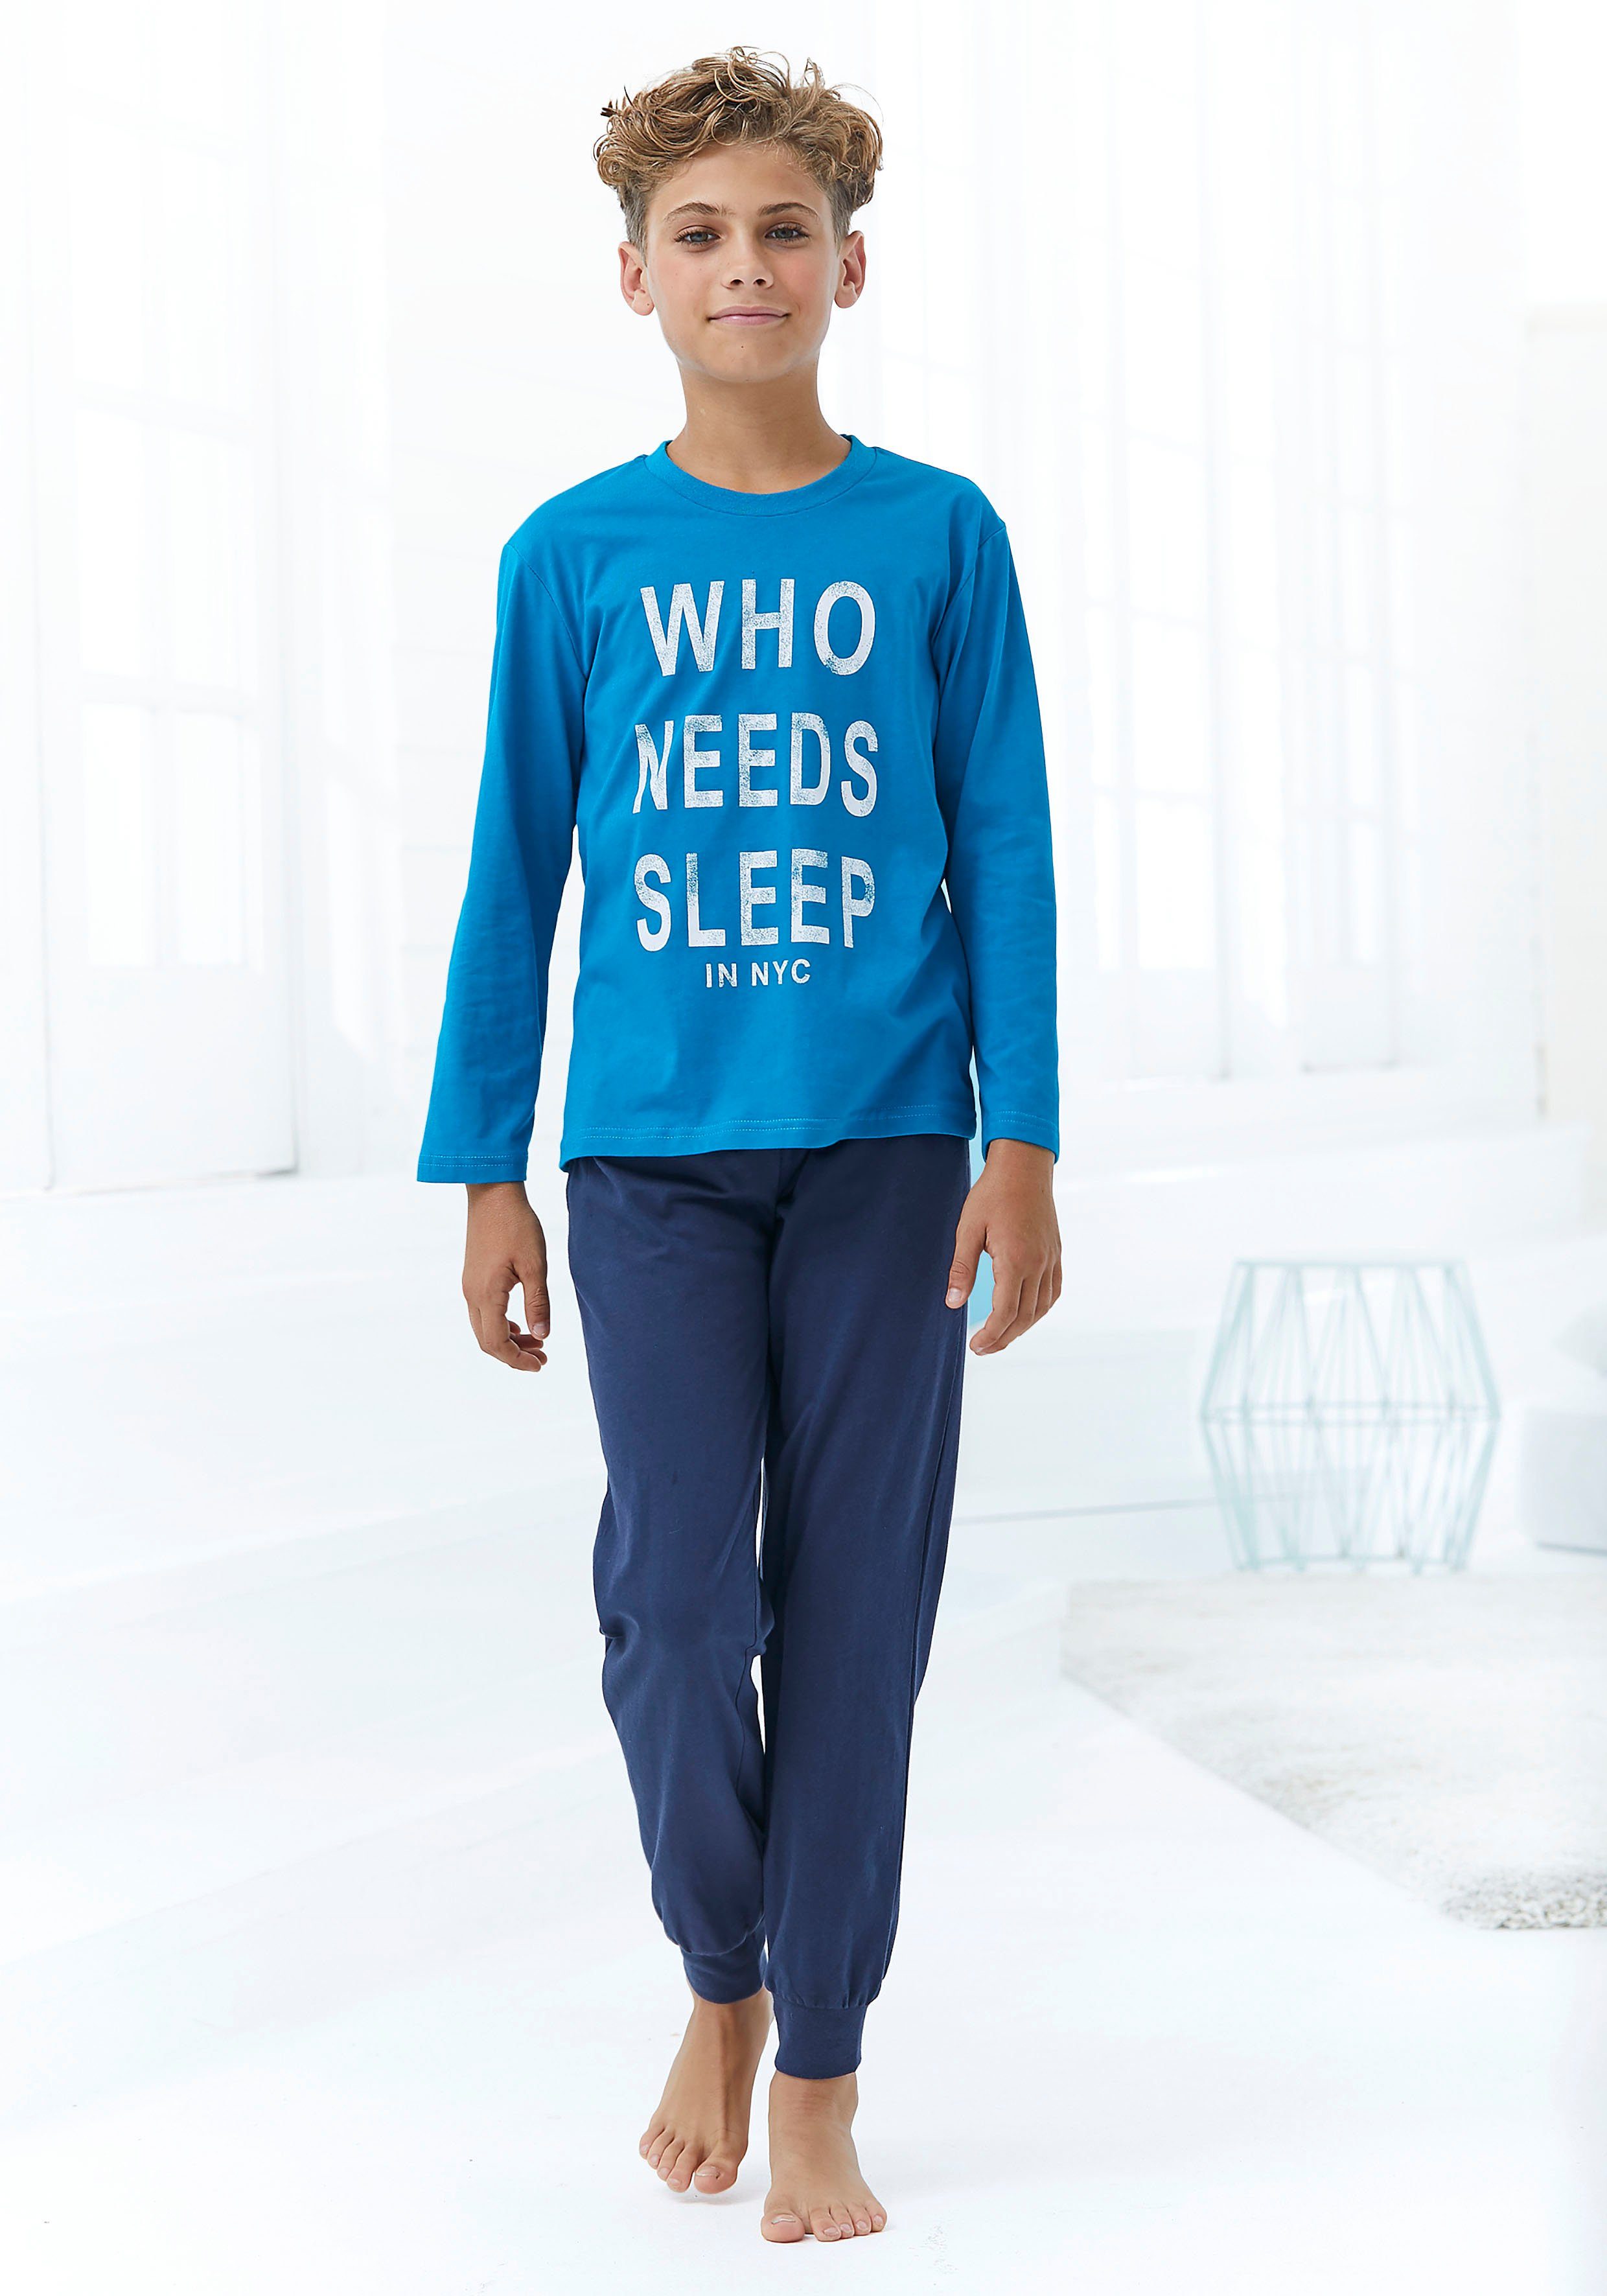 Pyjama (2 LE JOGGER needs AUTHENTIC sleep" Stück) 1 tlg., "Who